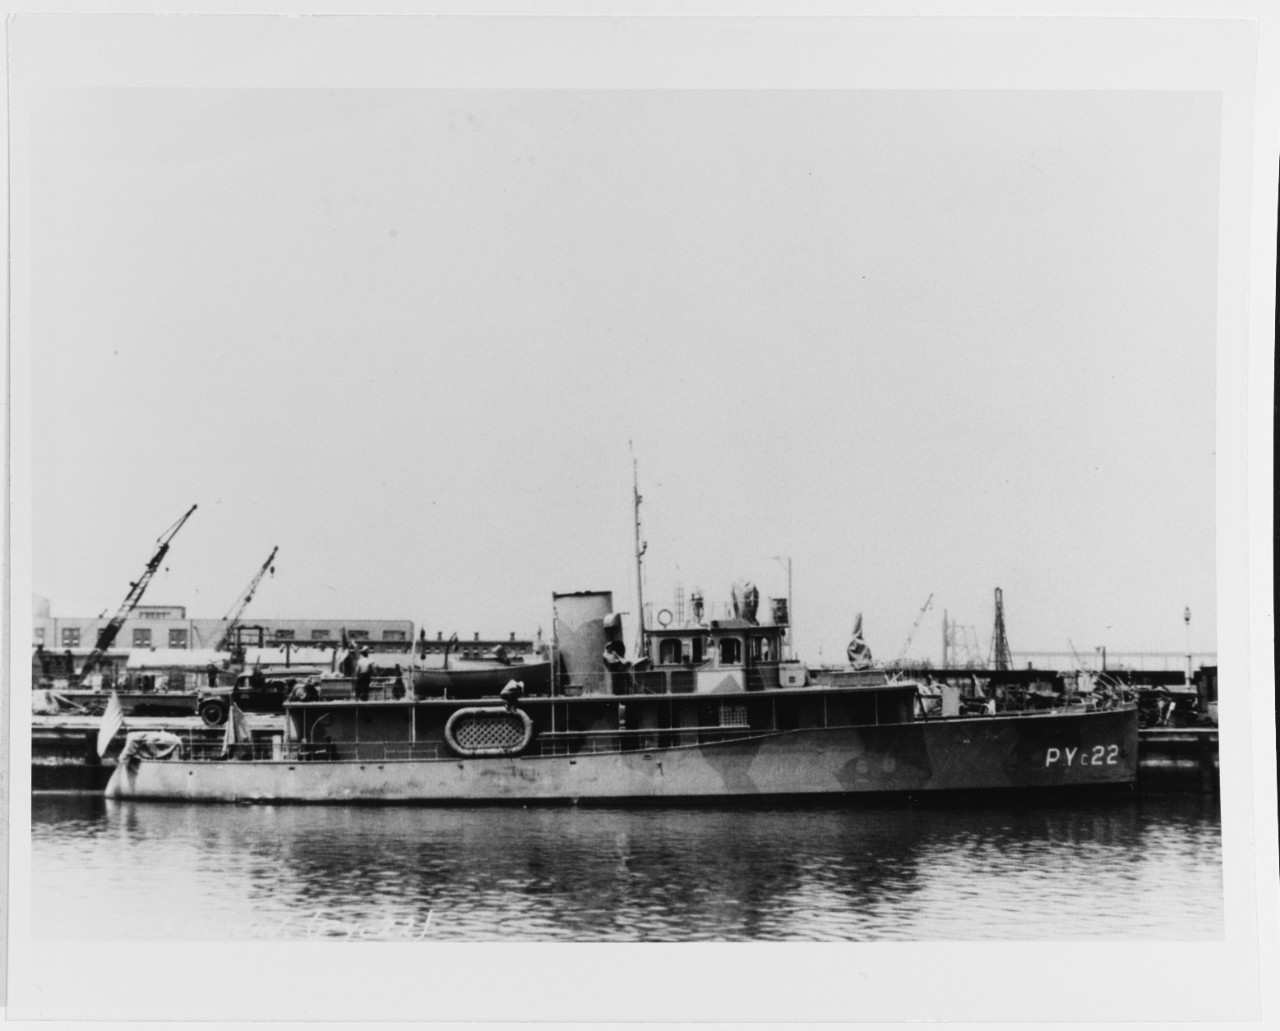 USS OLIVIN (PYc-22)